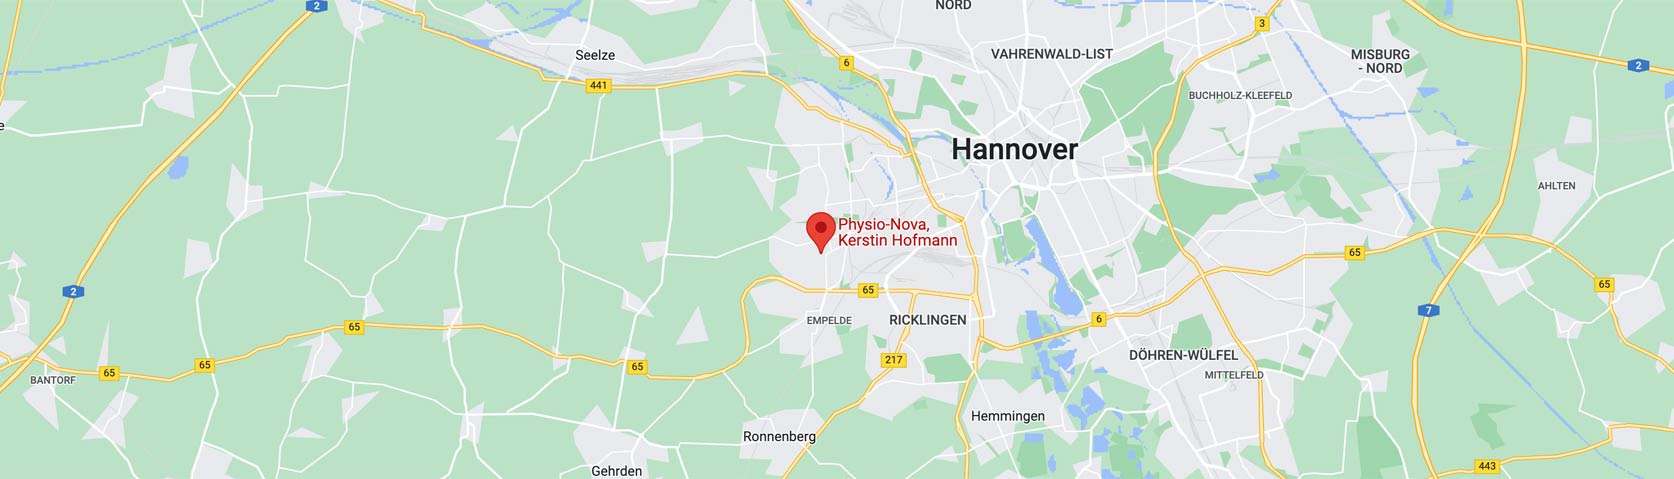 Google Maps Physio-Nova Badenstedt | Praxis für Physiotherapie in Hannover